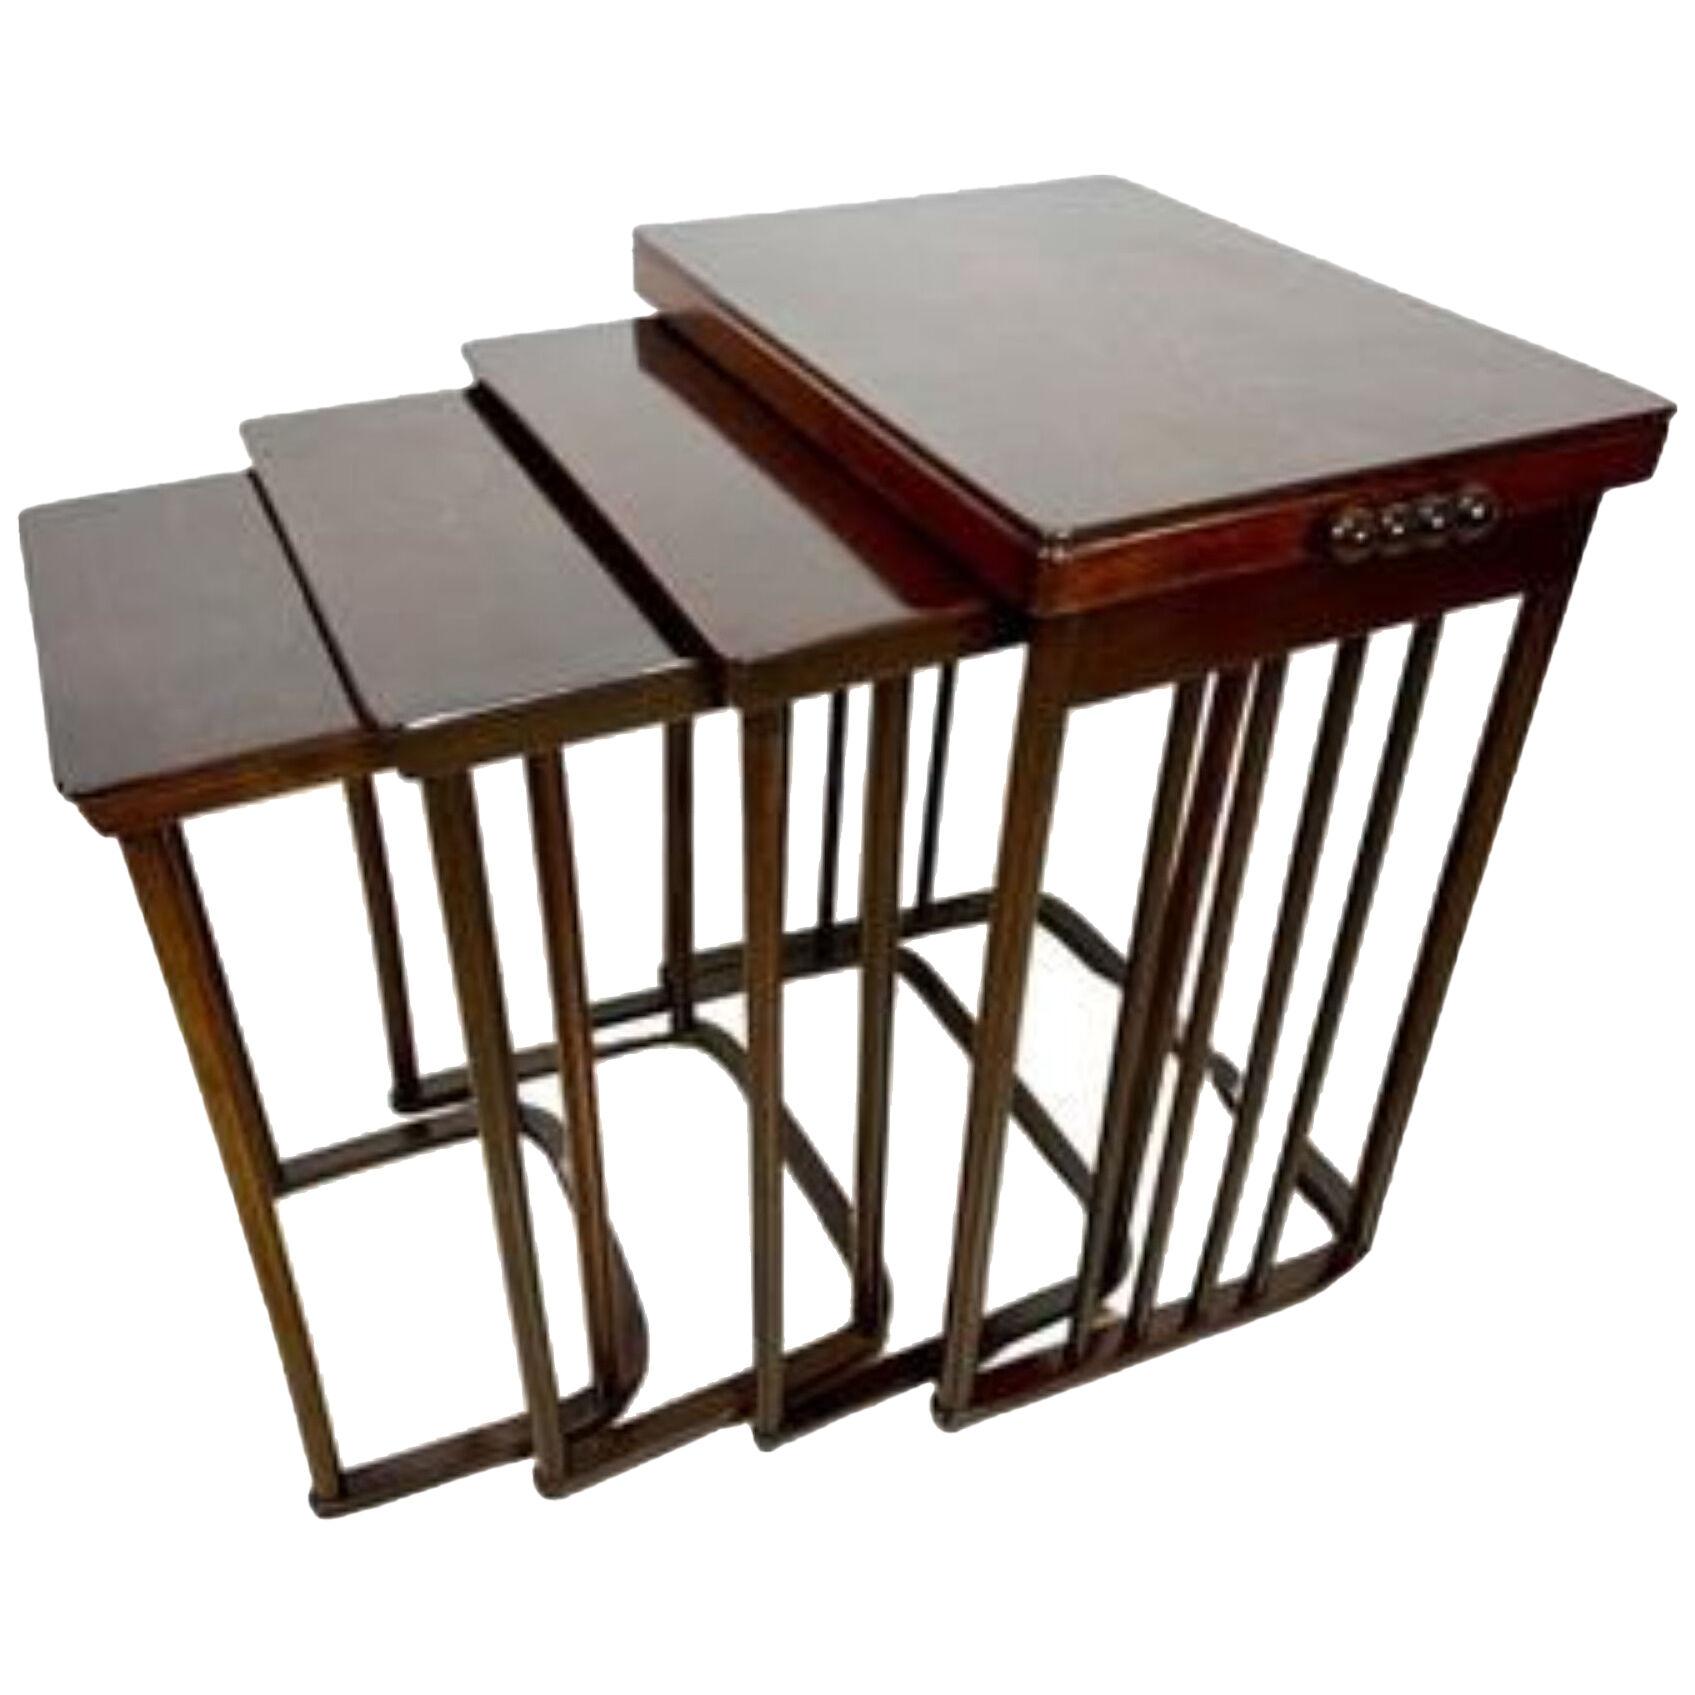 Josef Hoffmann Bentwood Nesting Table Mod. 986 By J & J Kohn, Austria, 1905